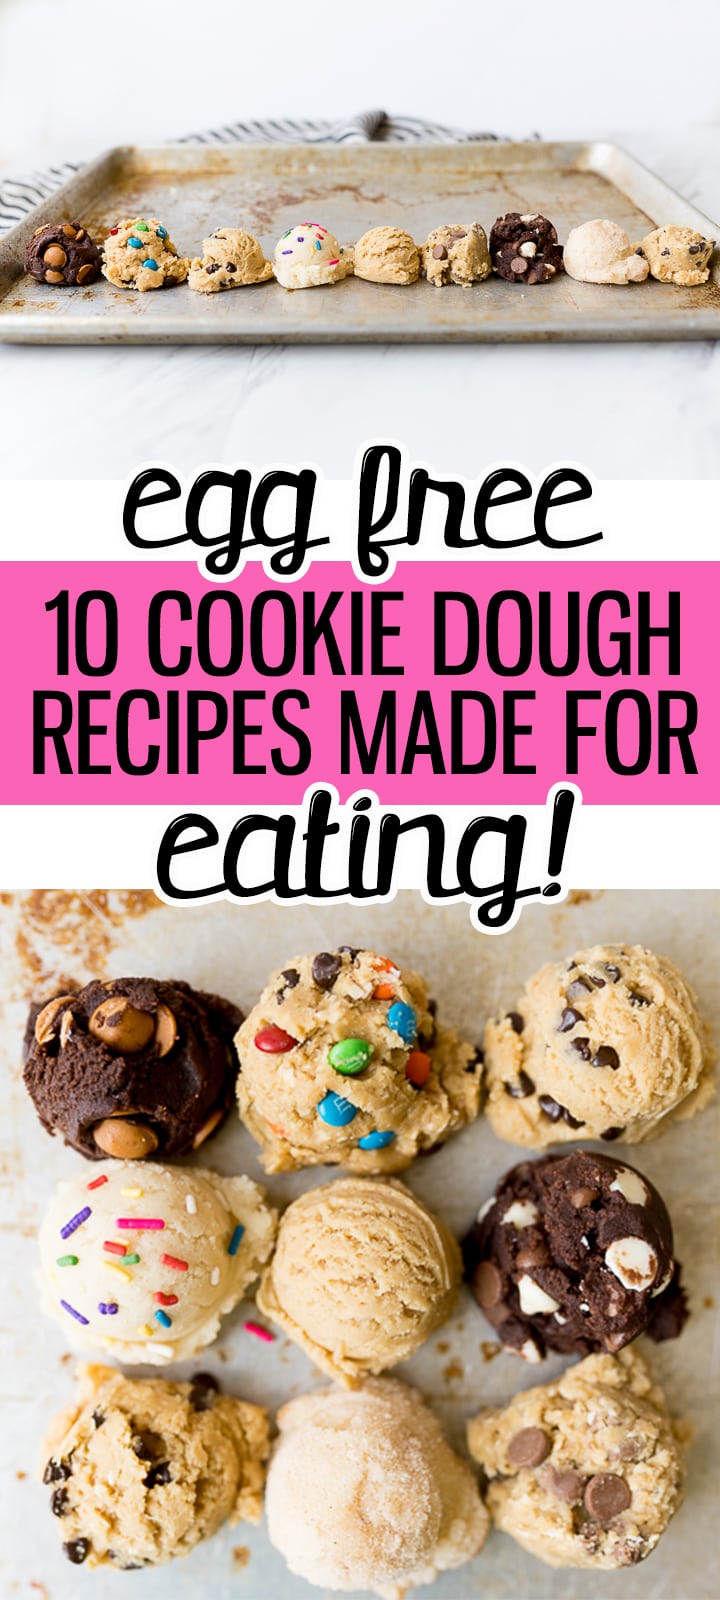 pin image for edible cookie dough recipes